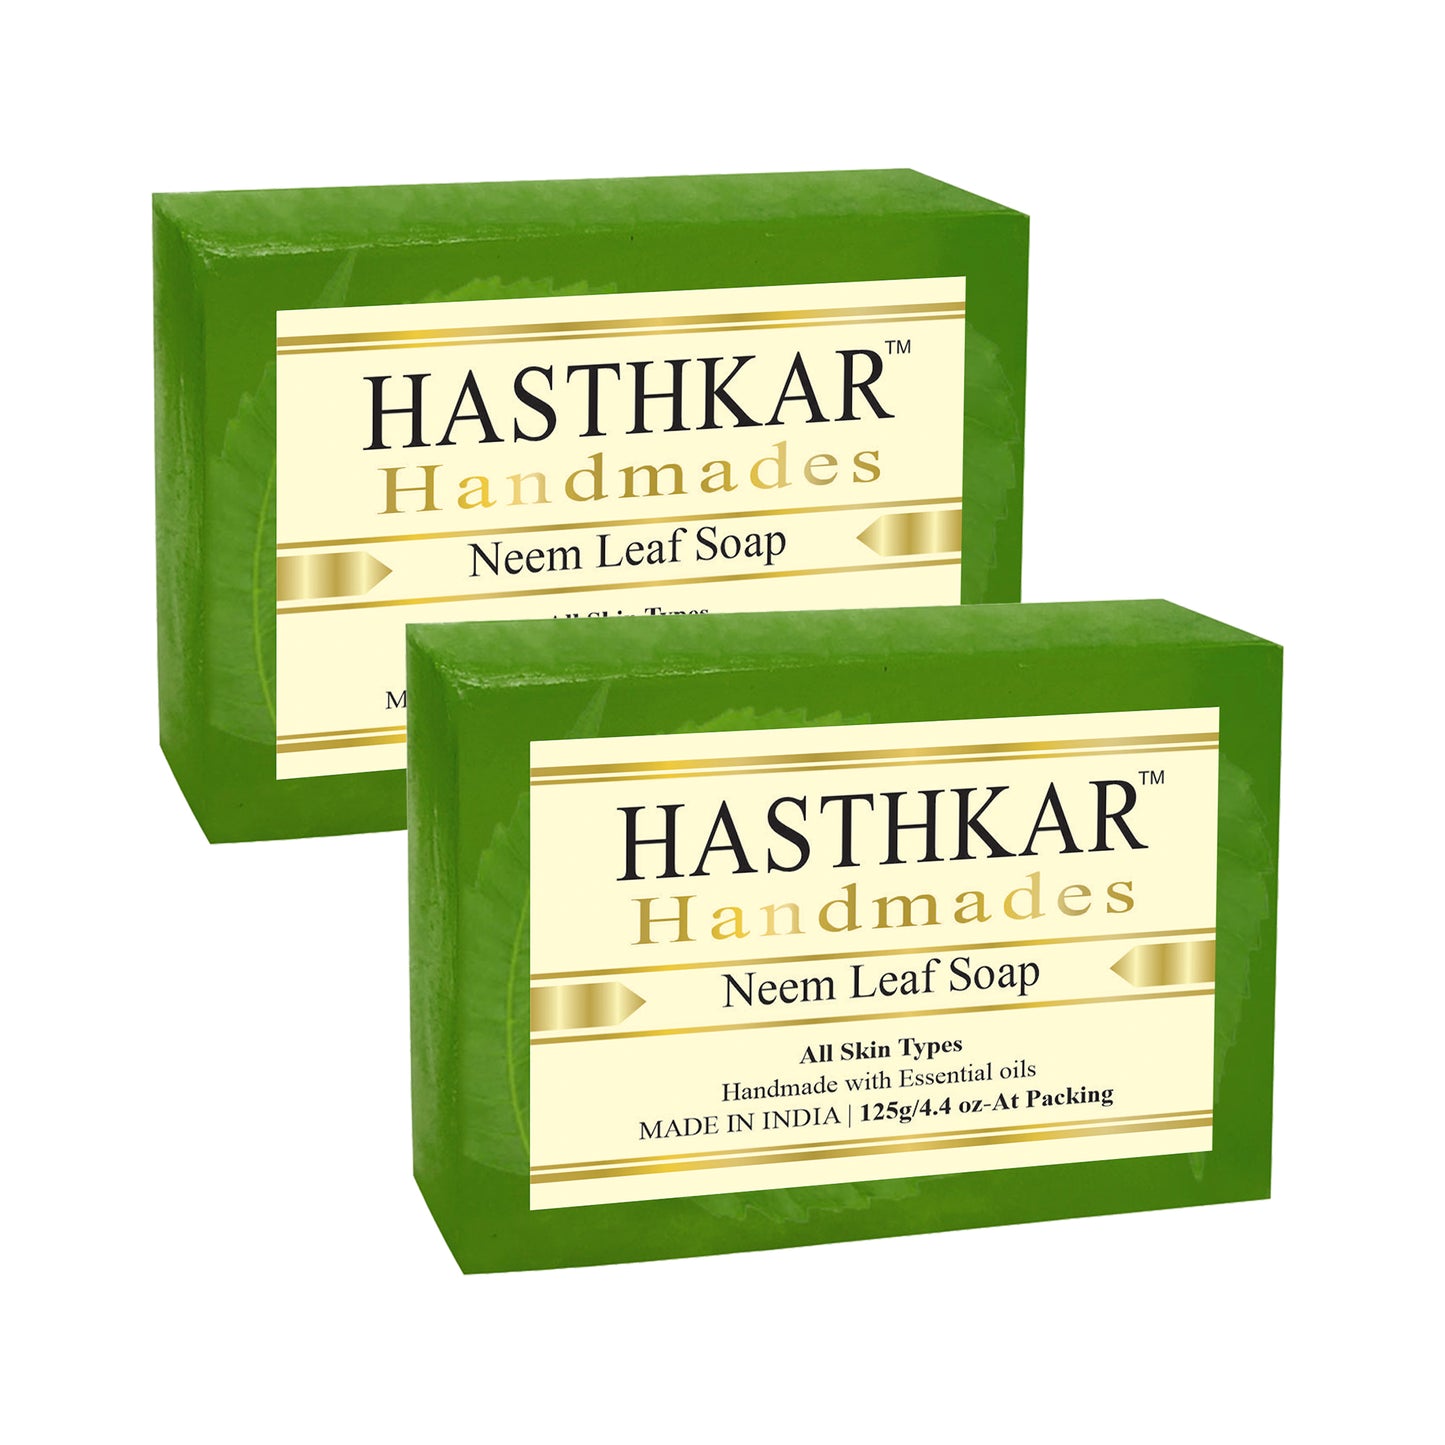 Hasthkar Handmades Glycerine Neem leaf Soap 125gm Pack of 2